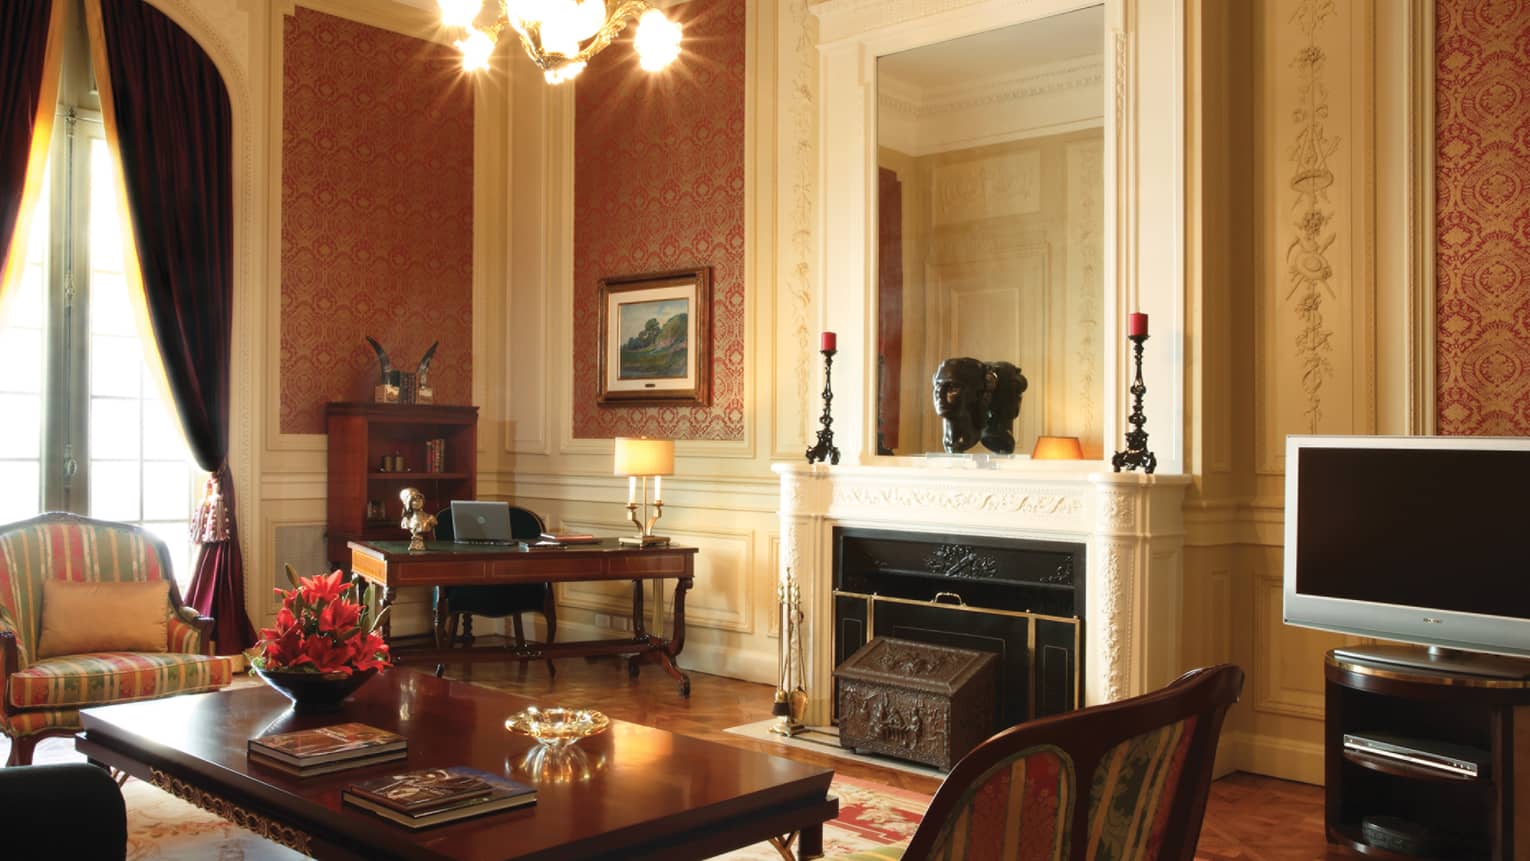 La Mansión Royale Suite living room with white fireplace mantel, dark wood furniture, Old World decor